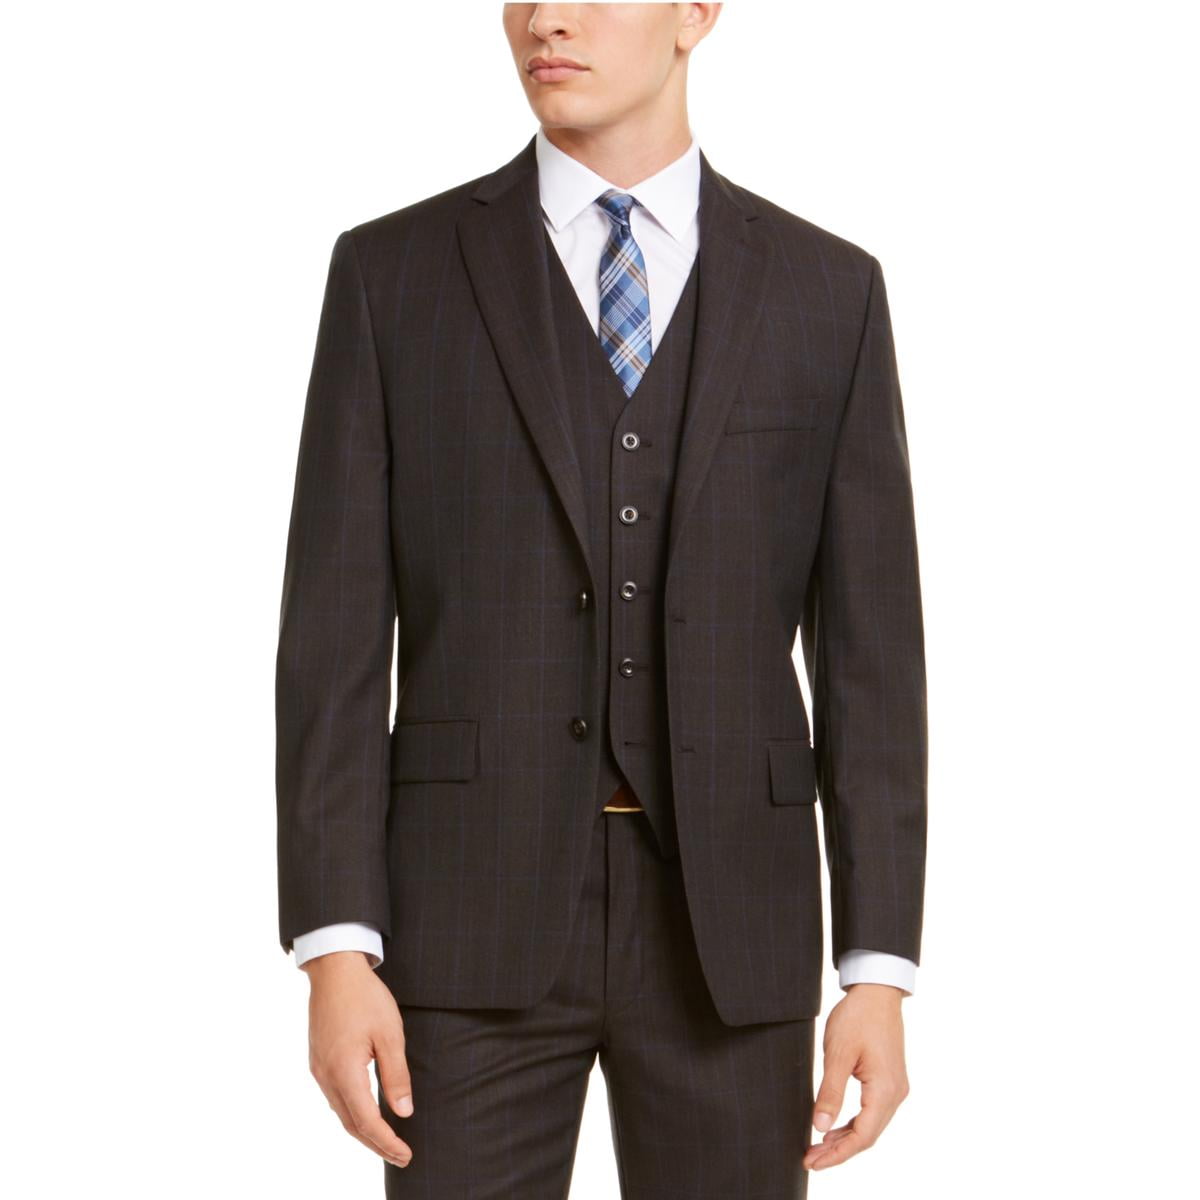 Edwards Garment Classic Three Button Pinstripe Suit Coat_NAVY_46 R 